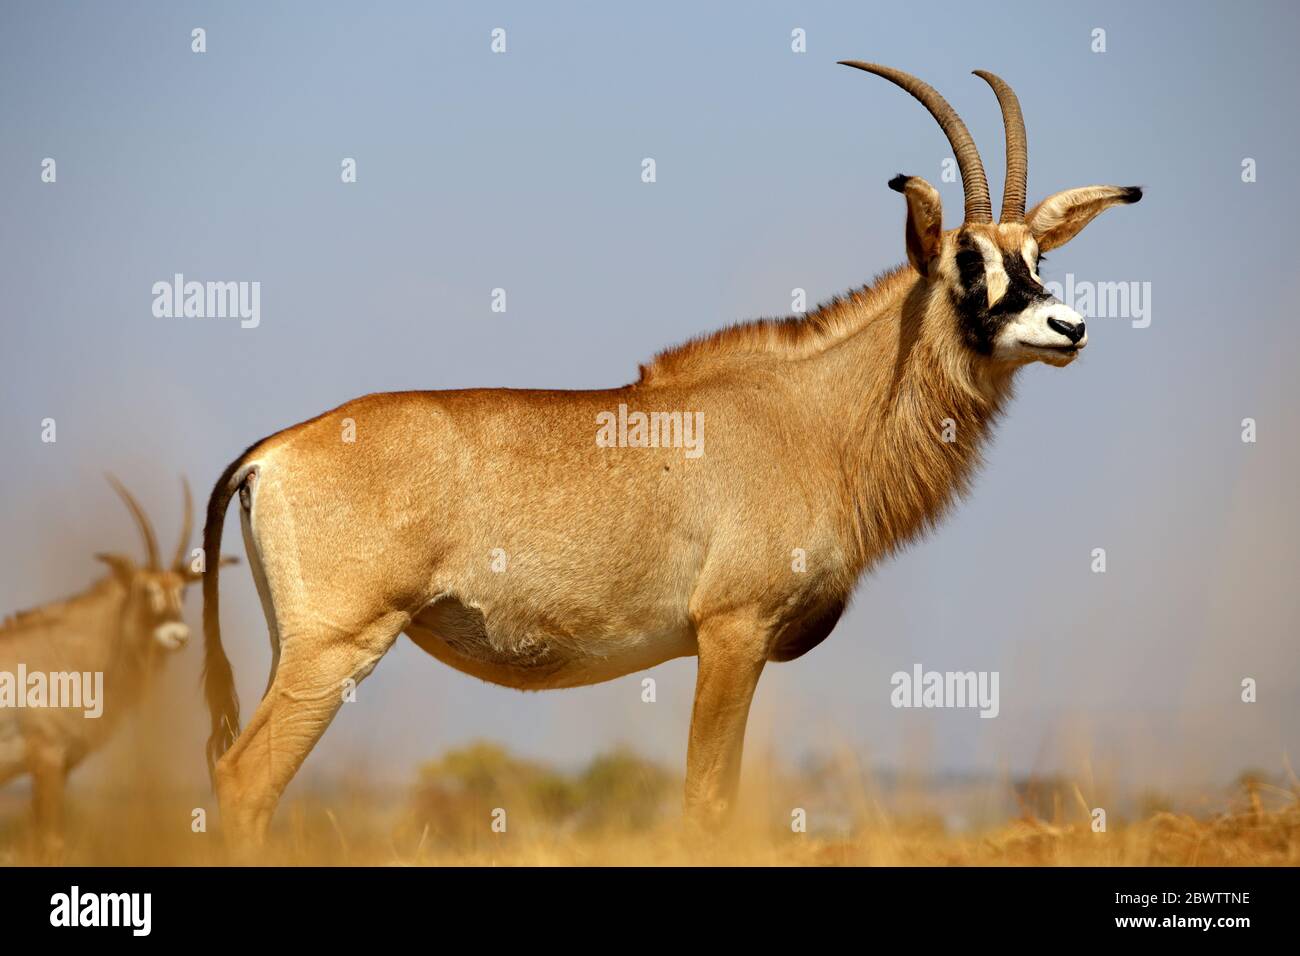 Eswatini, Roan antelope (Hippotragus equinus) standing outdoors Stock Photo